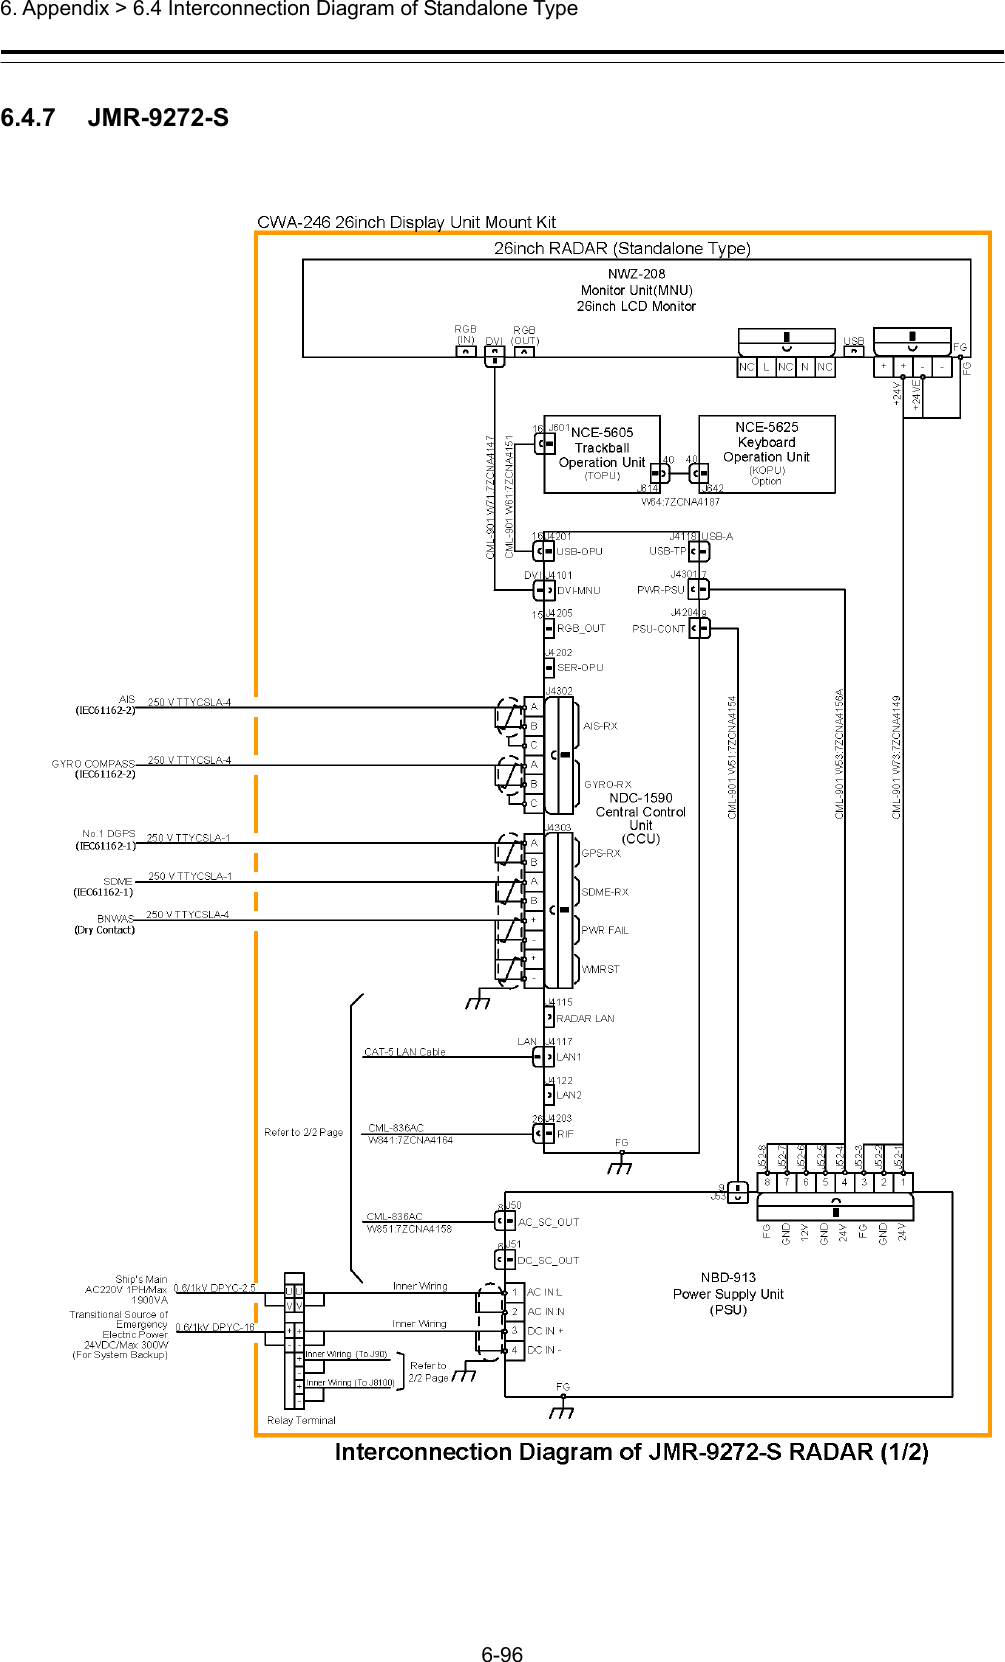  6. Appendix &gt; 6.4 Interconnection Diagram of Standalone Type 6-96  6.4.7   JMR-9272-S 